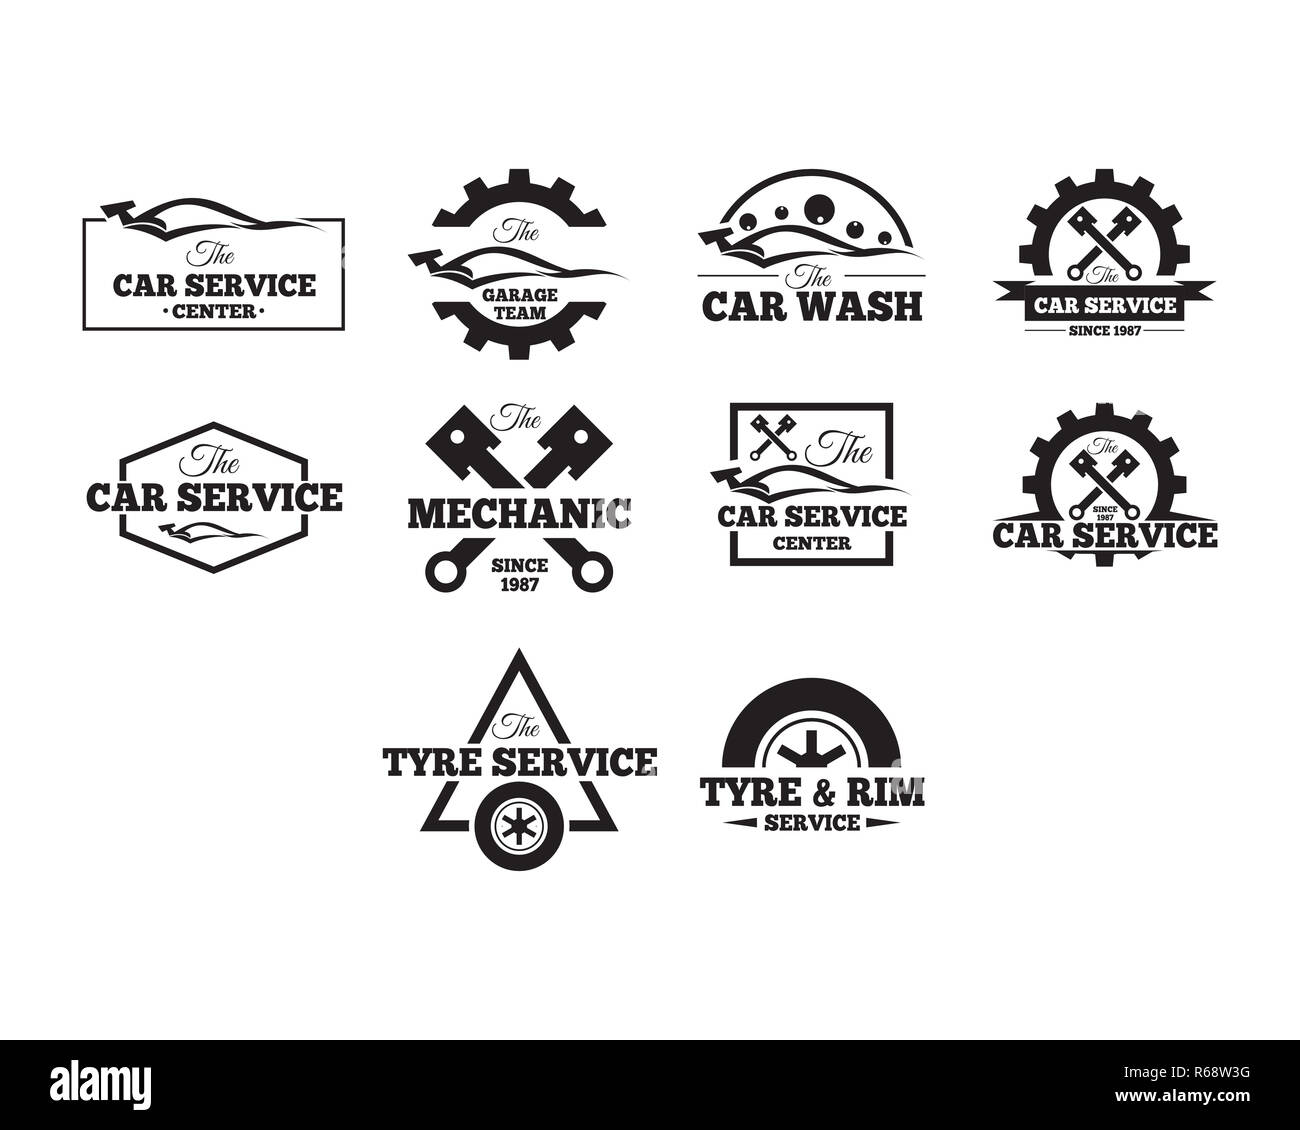 Automobile association logo Cut Out Stock Images & Pictures - Alamy